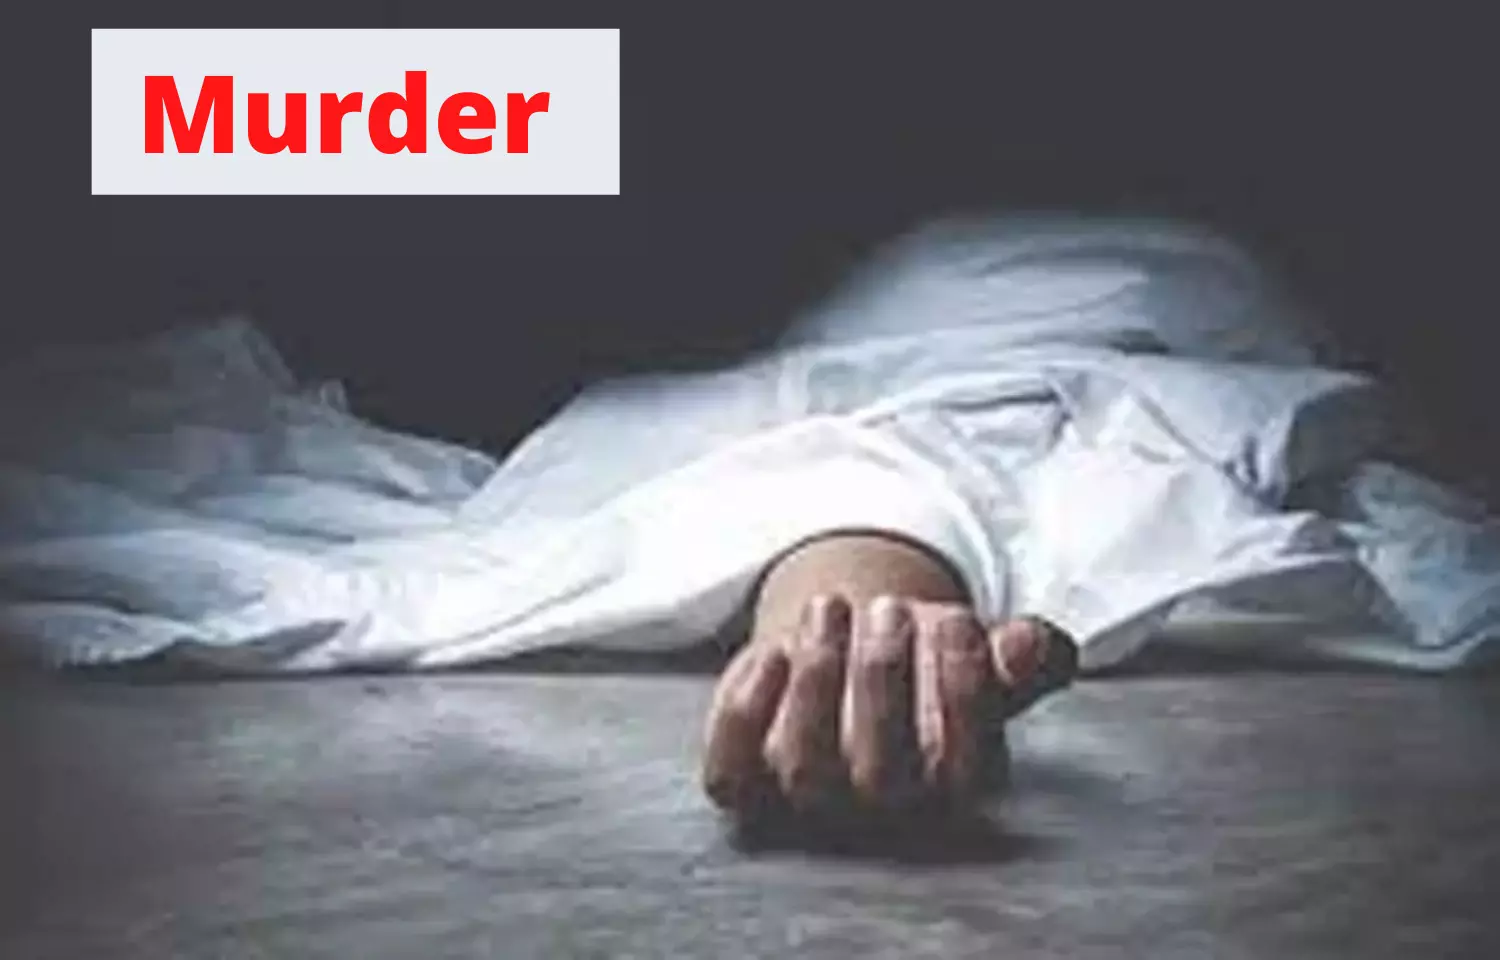 Tamil Nadu Shocker: Govt nurse brutally murdered at her residence